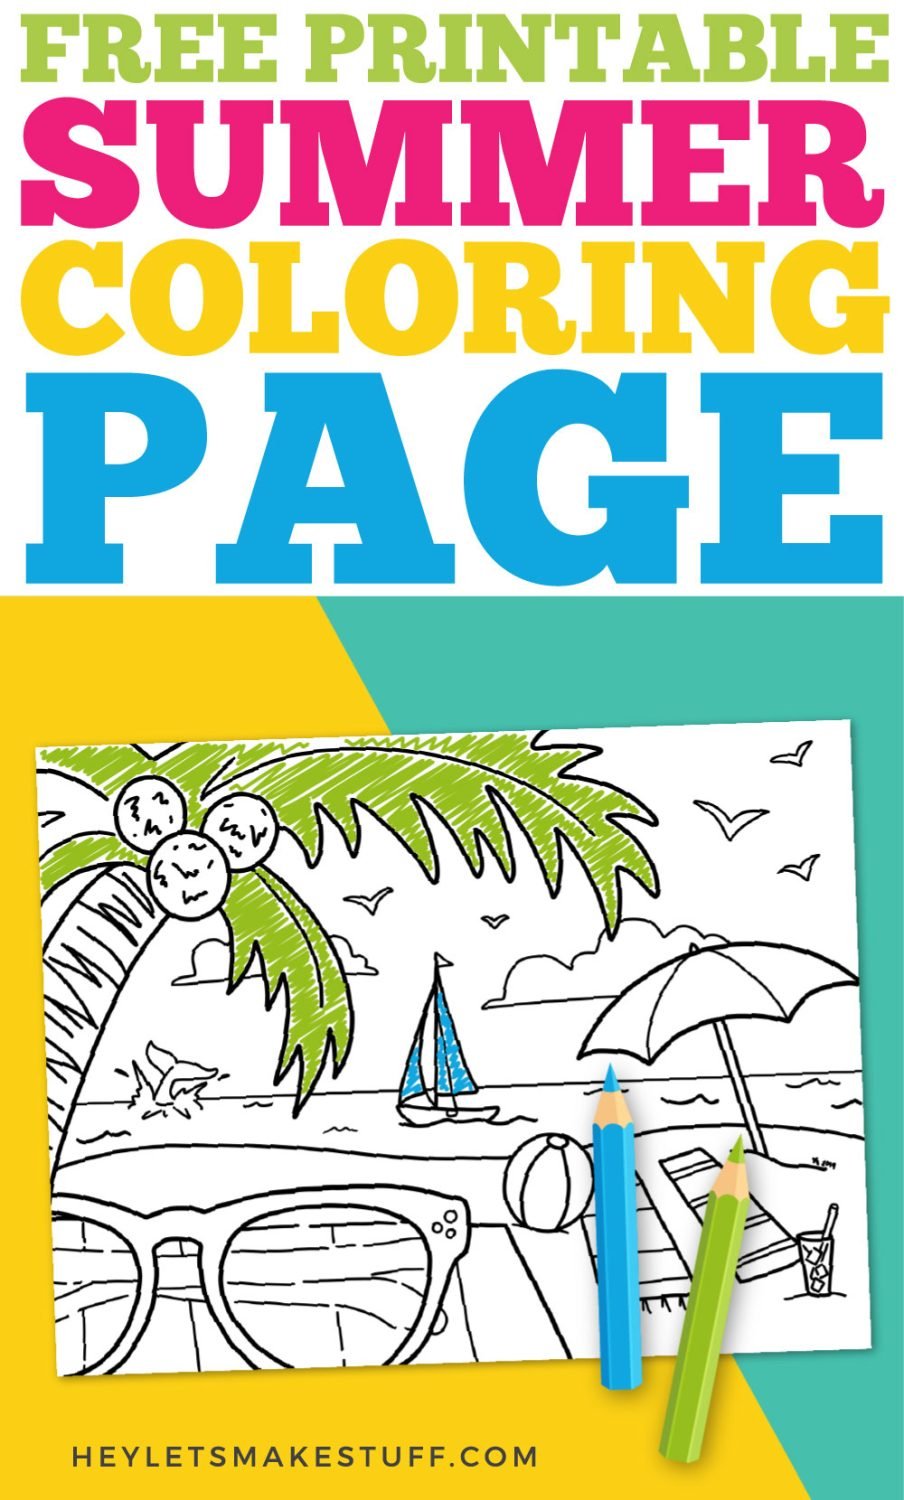 Summer coloring page pin image